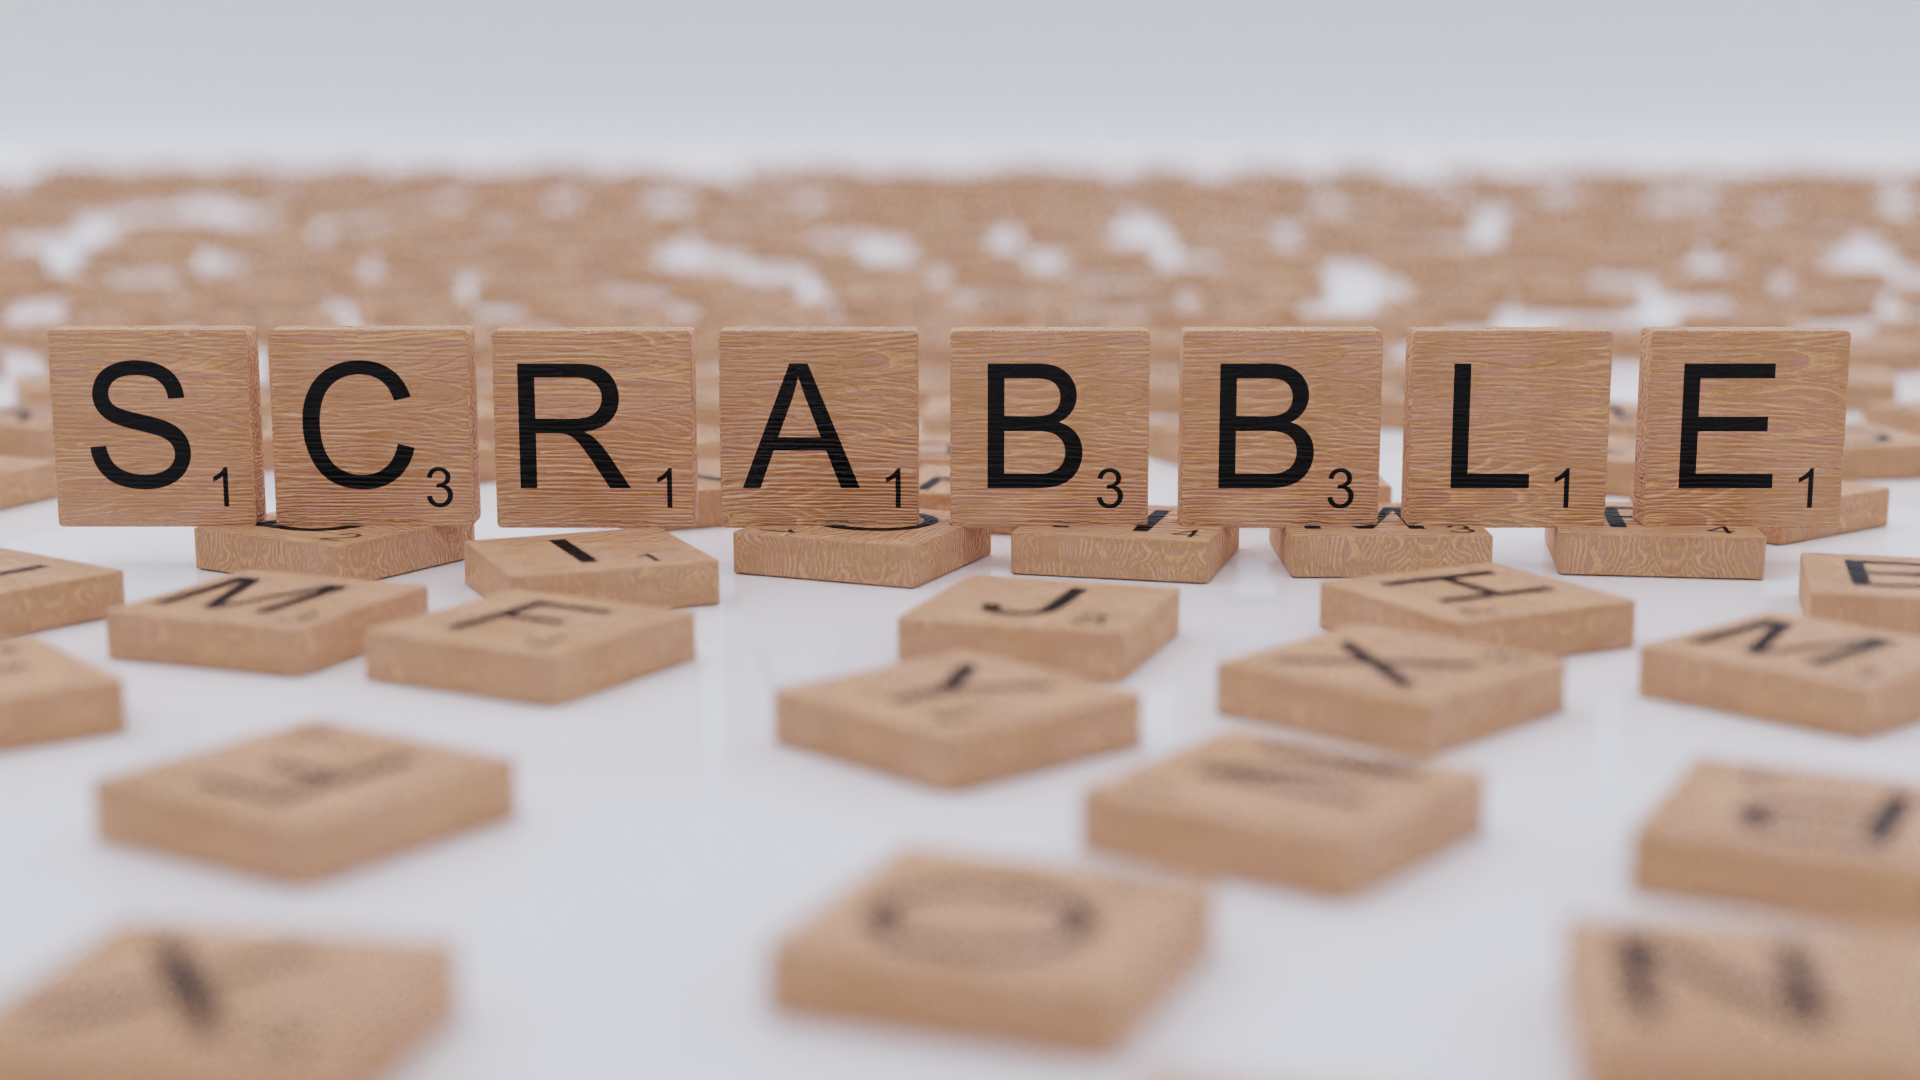 Scrabble Tiles preview image 1